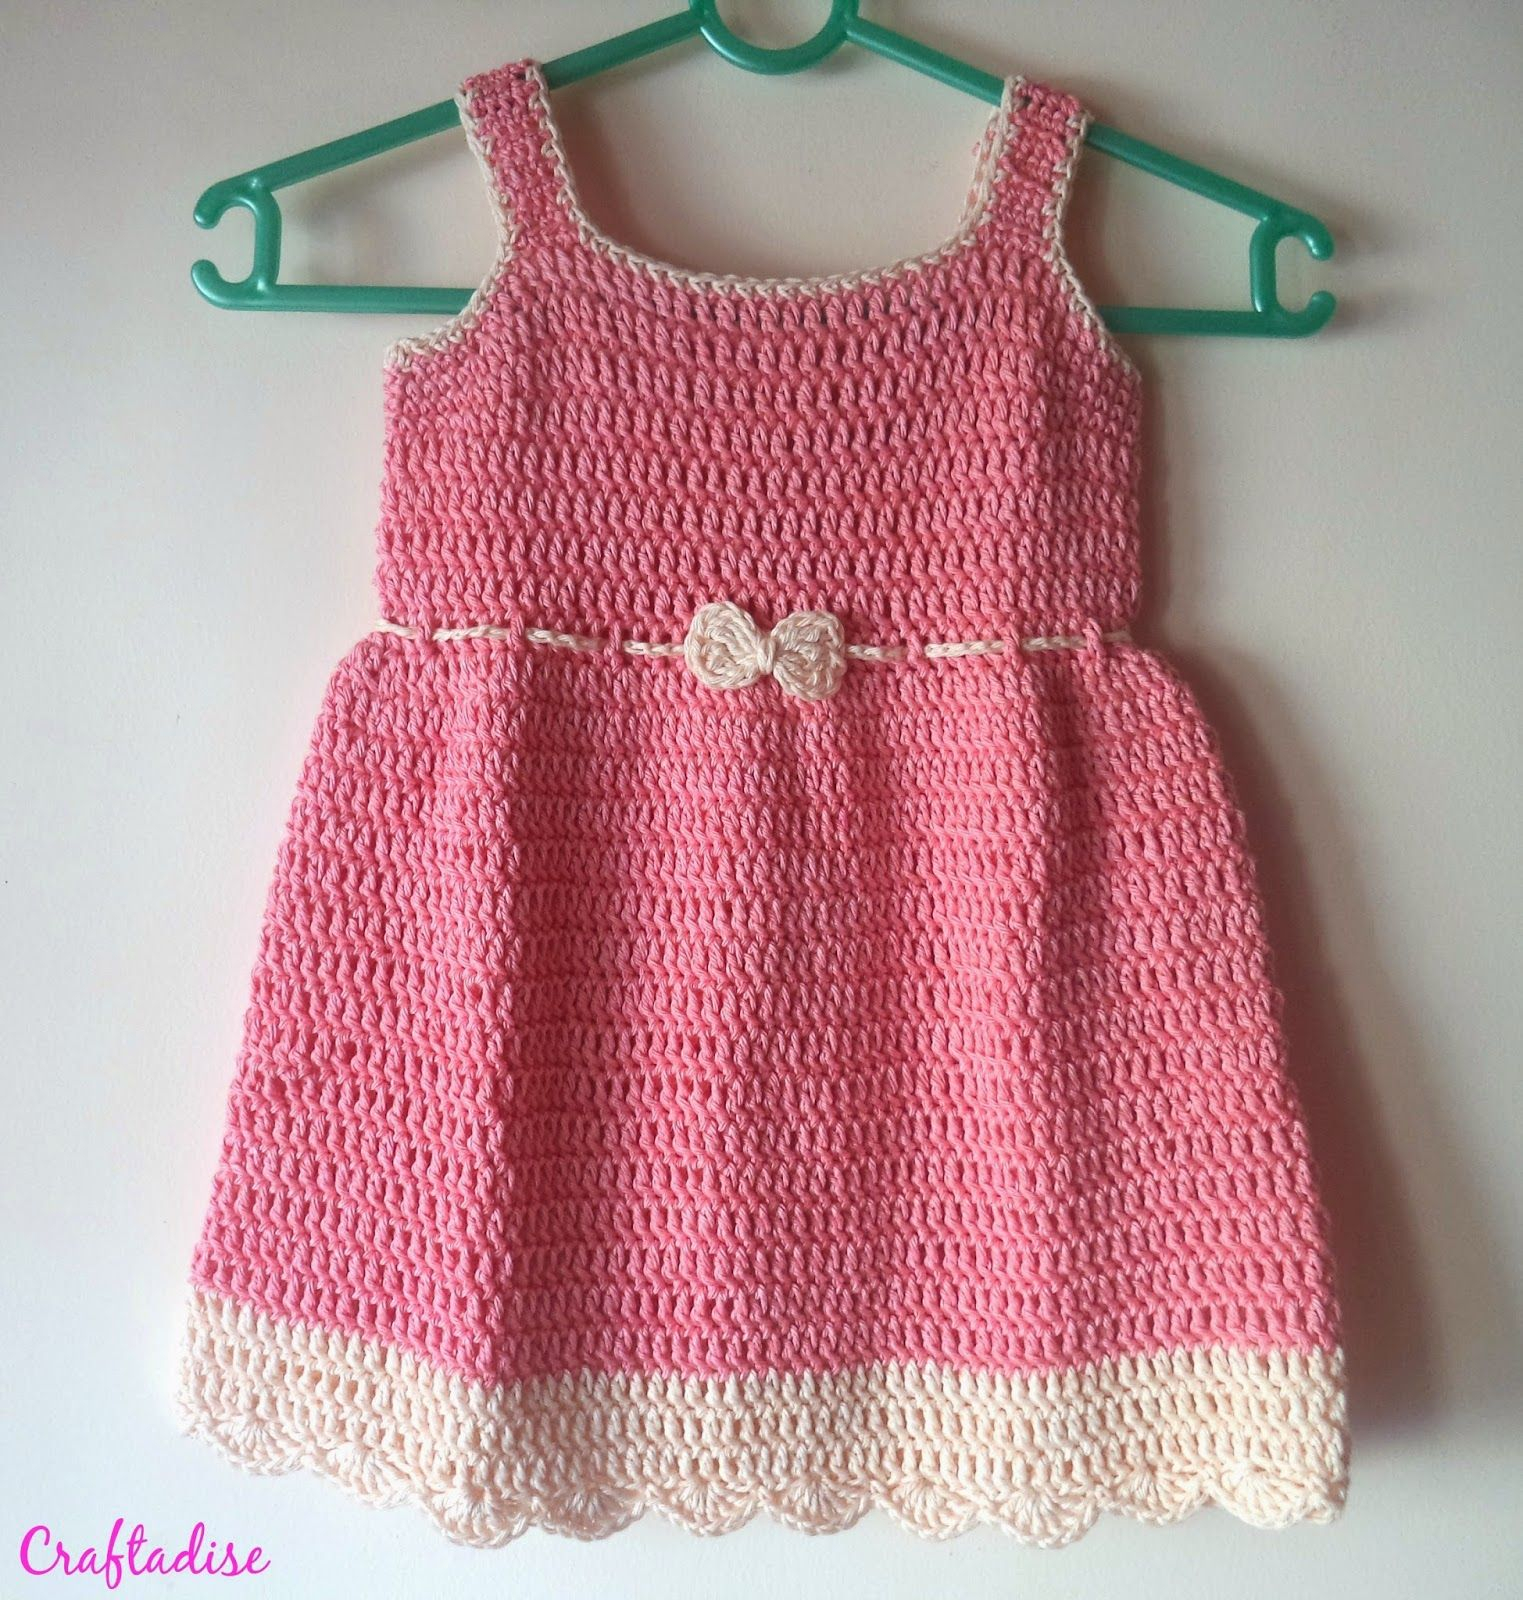 Crochet Toddler Dress Pattern Free Crochet Pattern Crochet Summer Peach Toddler Dress My Top